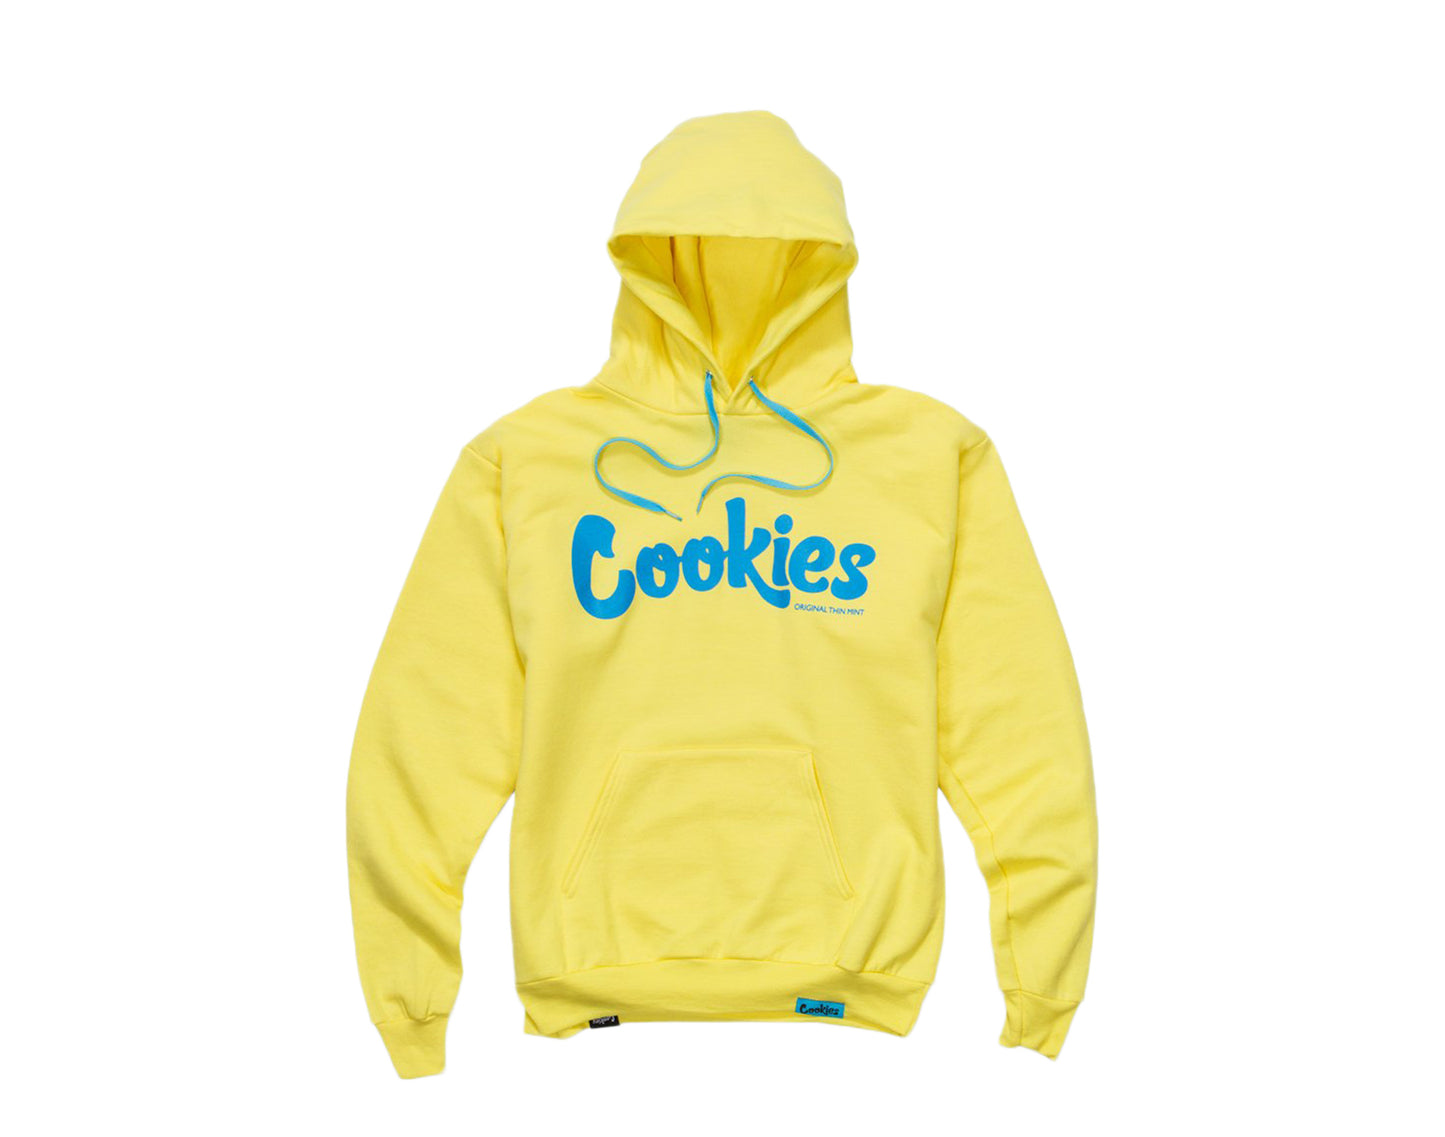 Cookies Original Logo Thin Mint Fleece Yellow/Blue Men's Hoodie 1536H3320-YLB